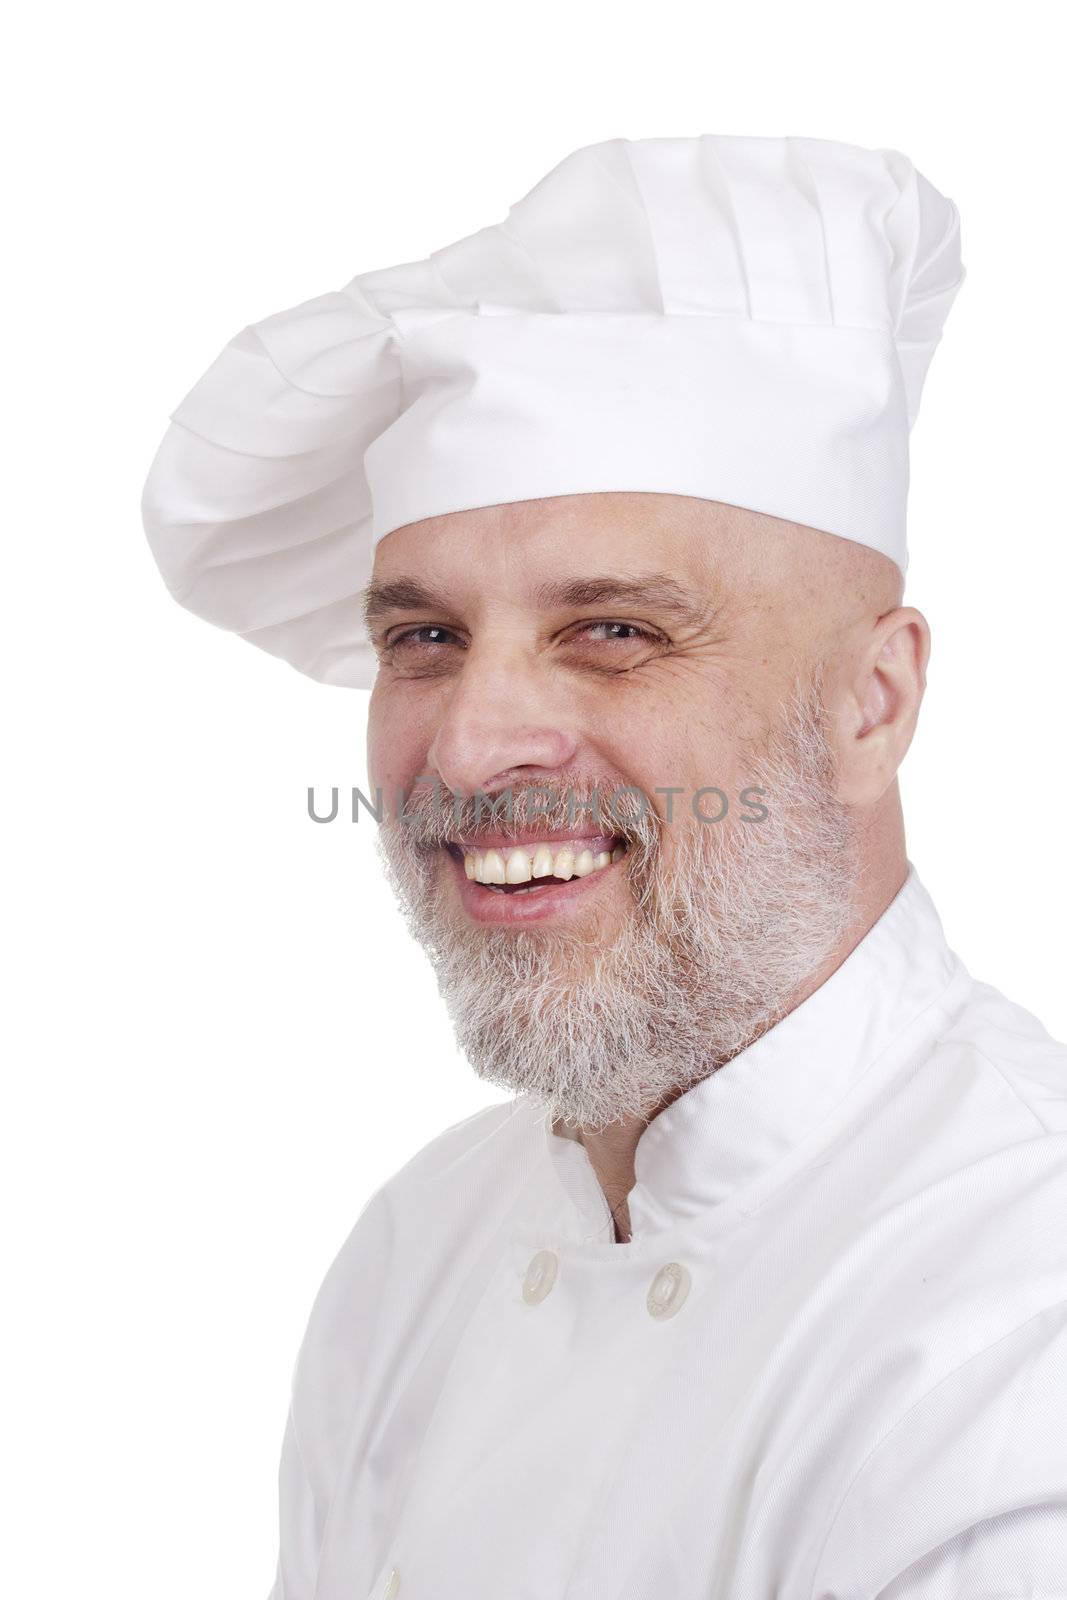 Portrait of a happy chef in chef's uniform.